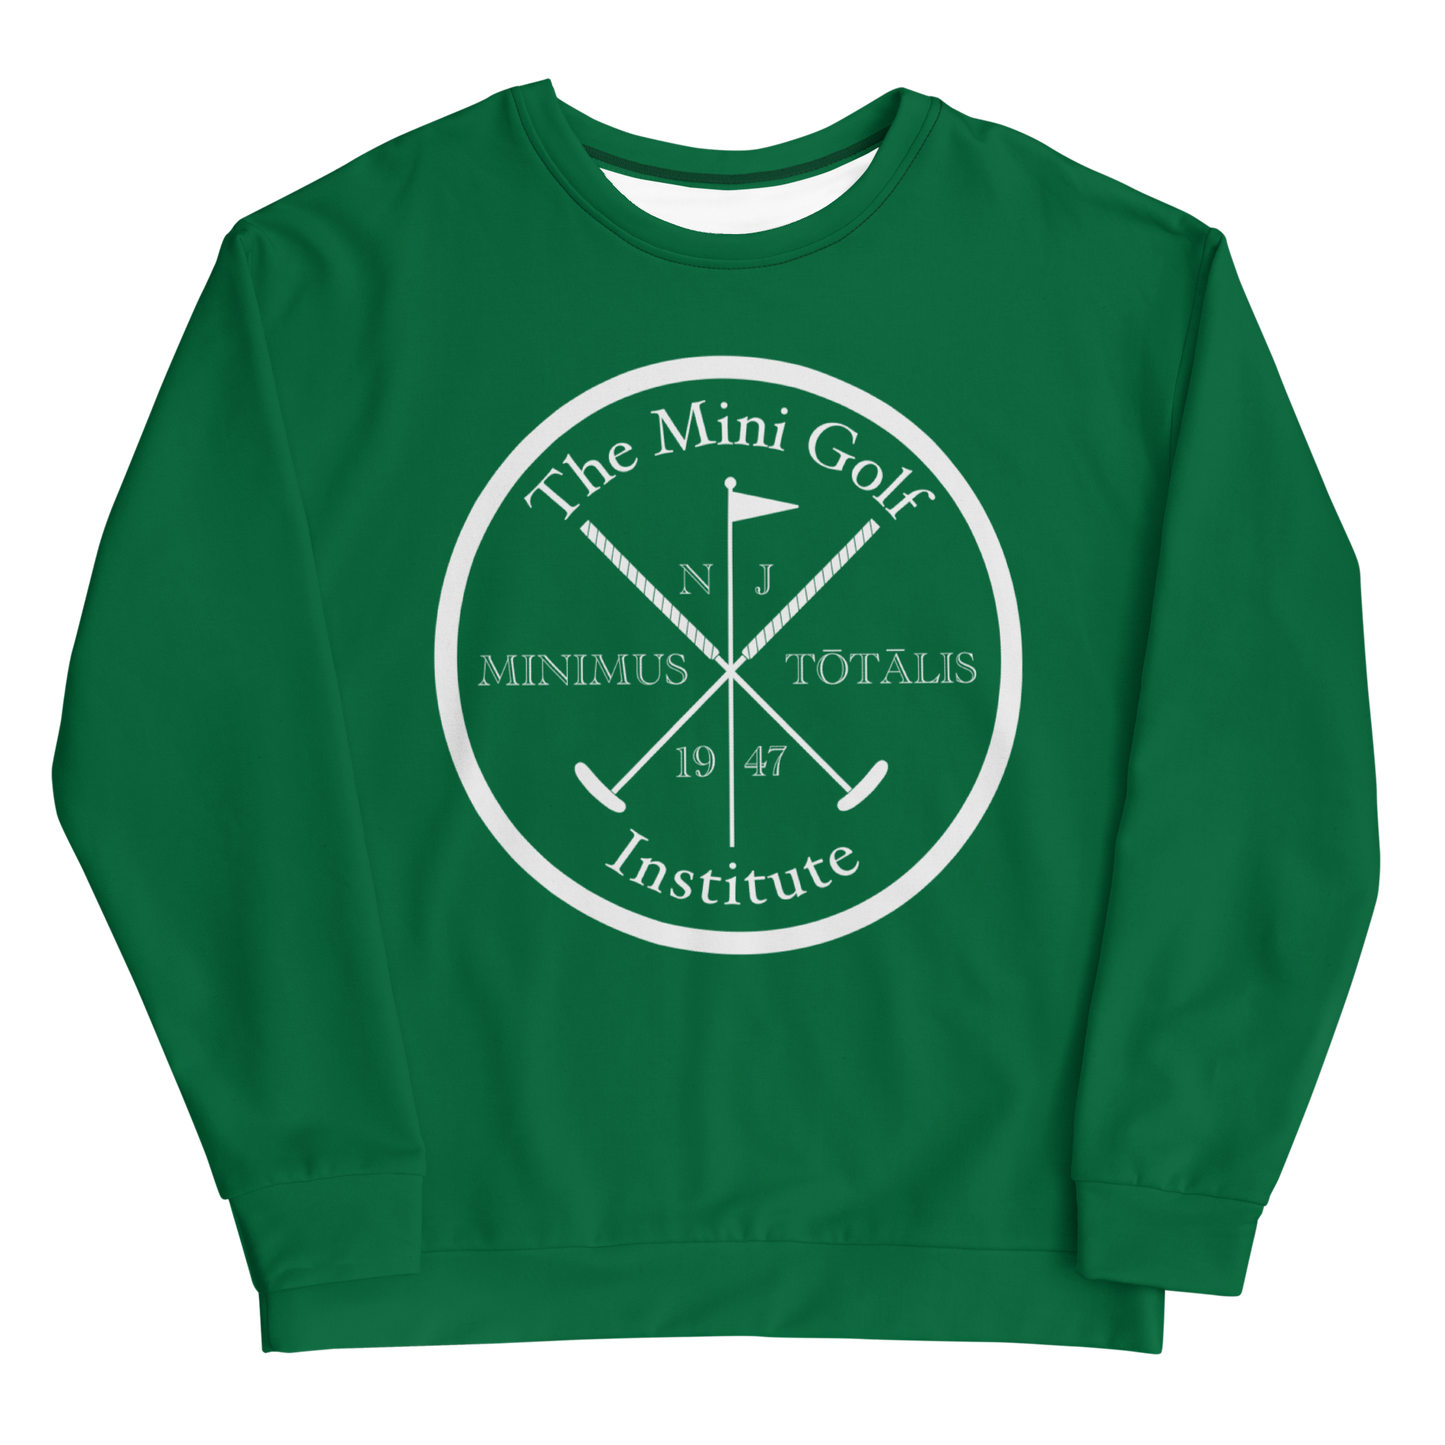 The Mini Golf Institute Sweatshirt